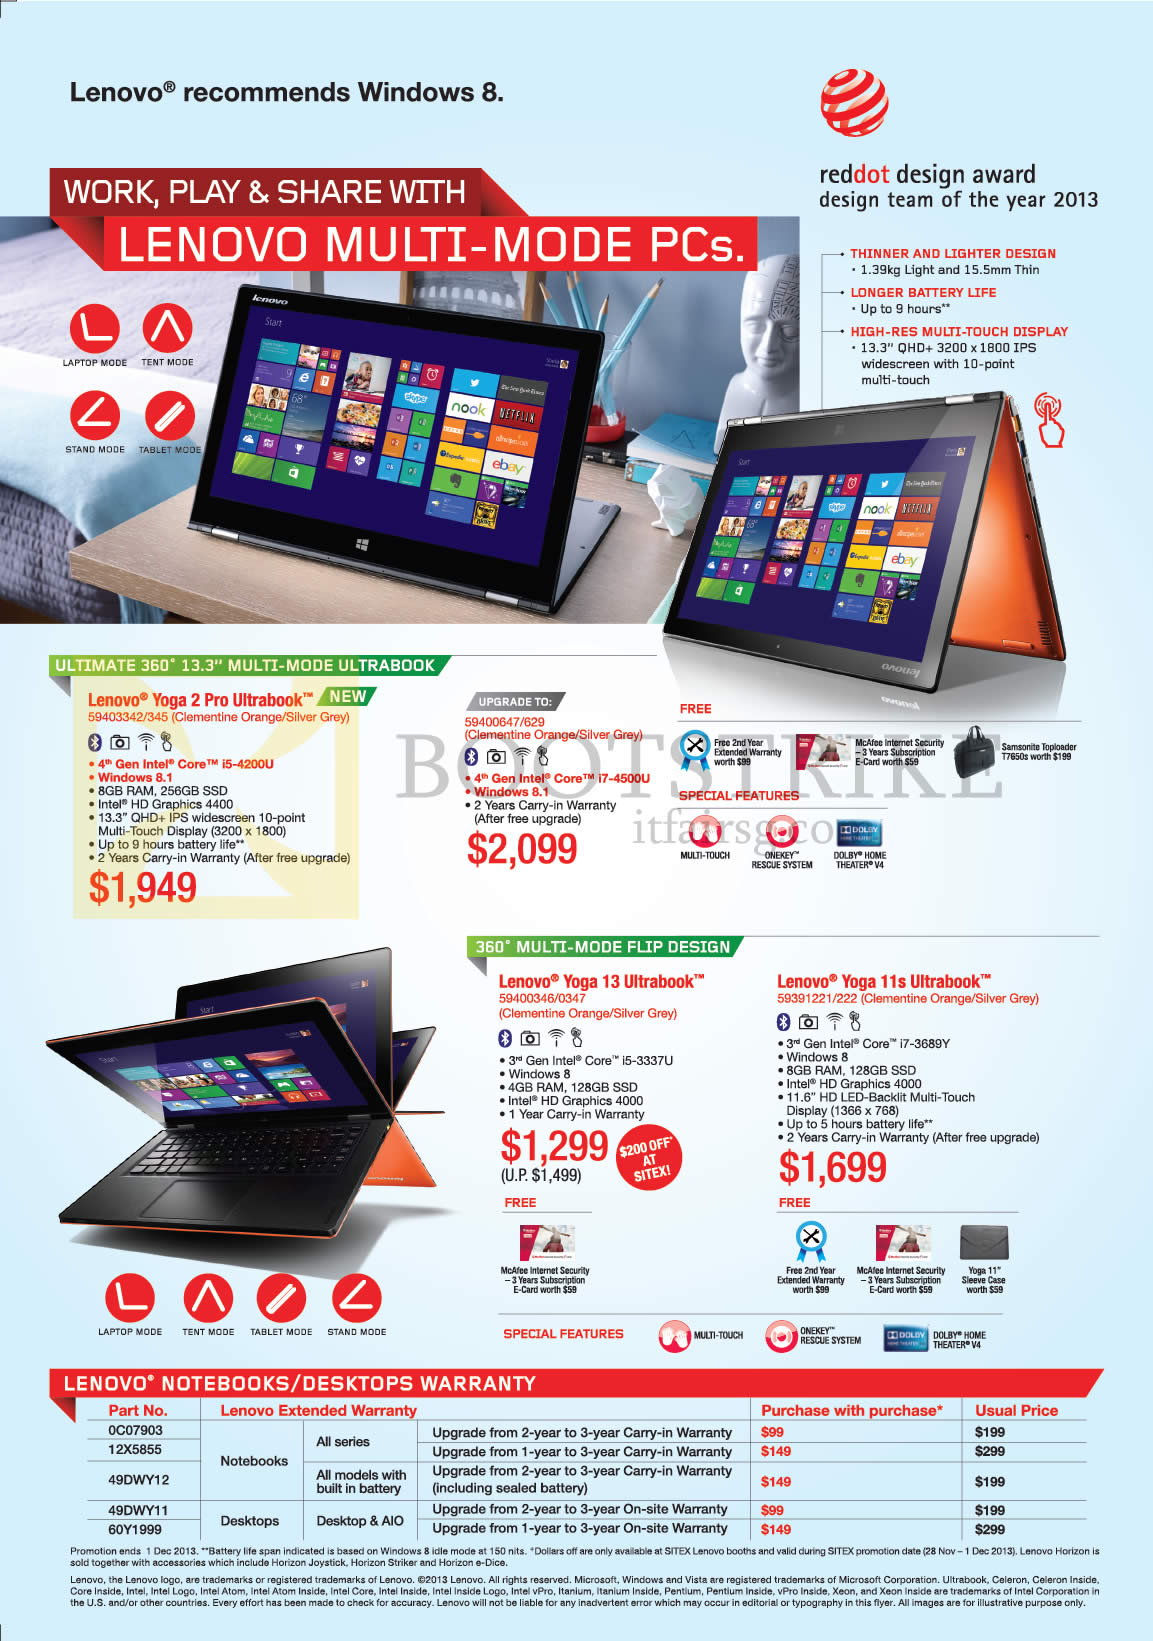 SITEX 2013 price list image brochure of Lenovo Notebooks Yoga 2 Pro Ultrabook, Yoga 13, Yoga 11s